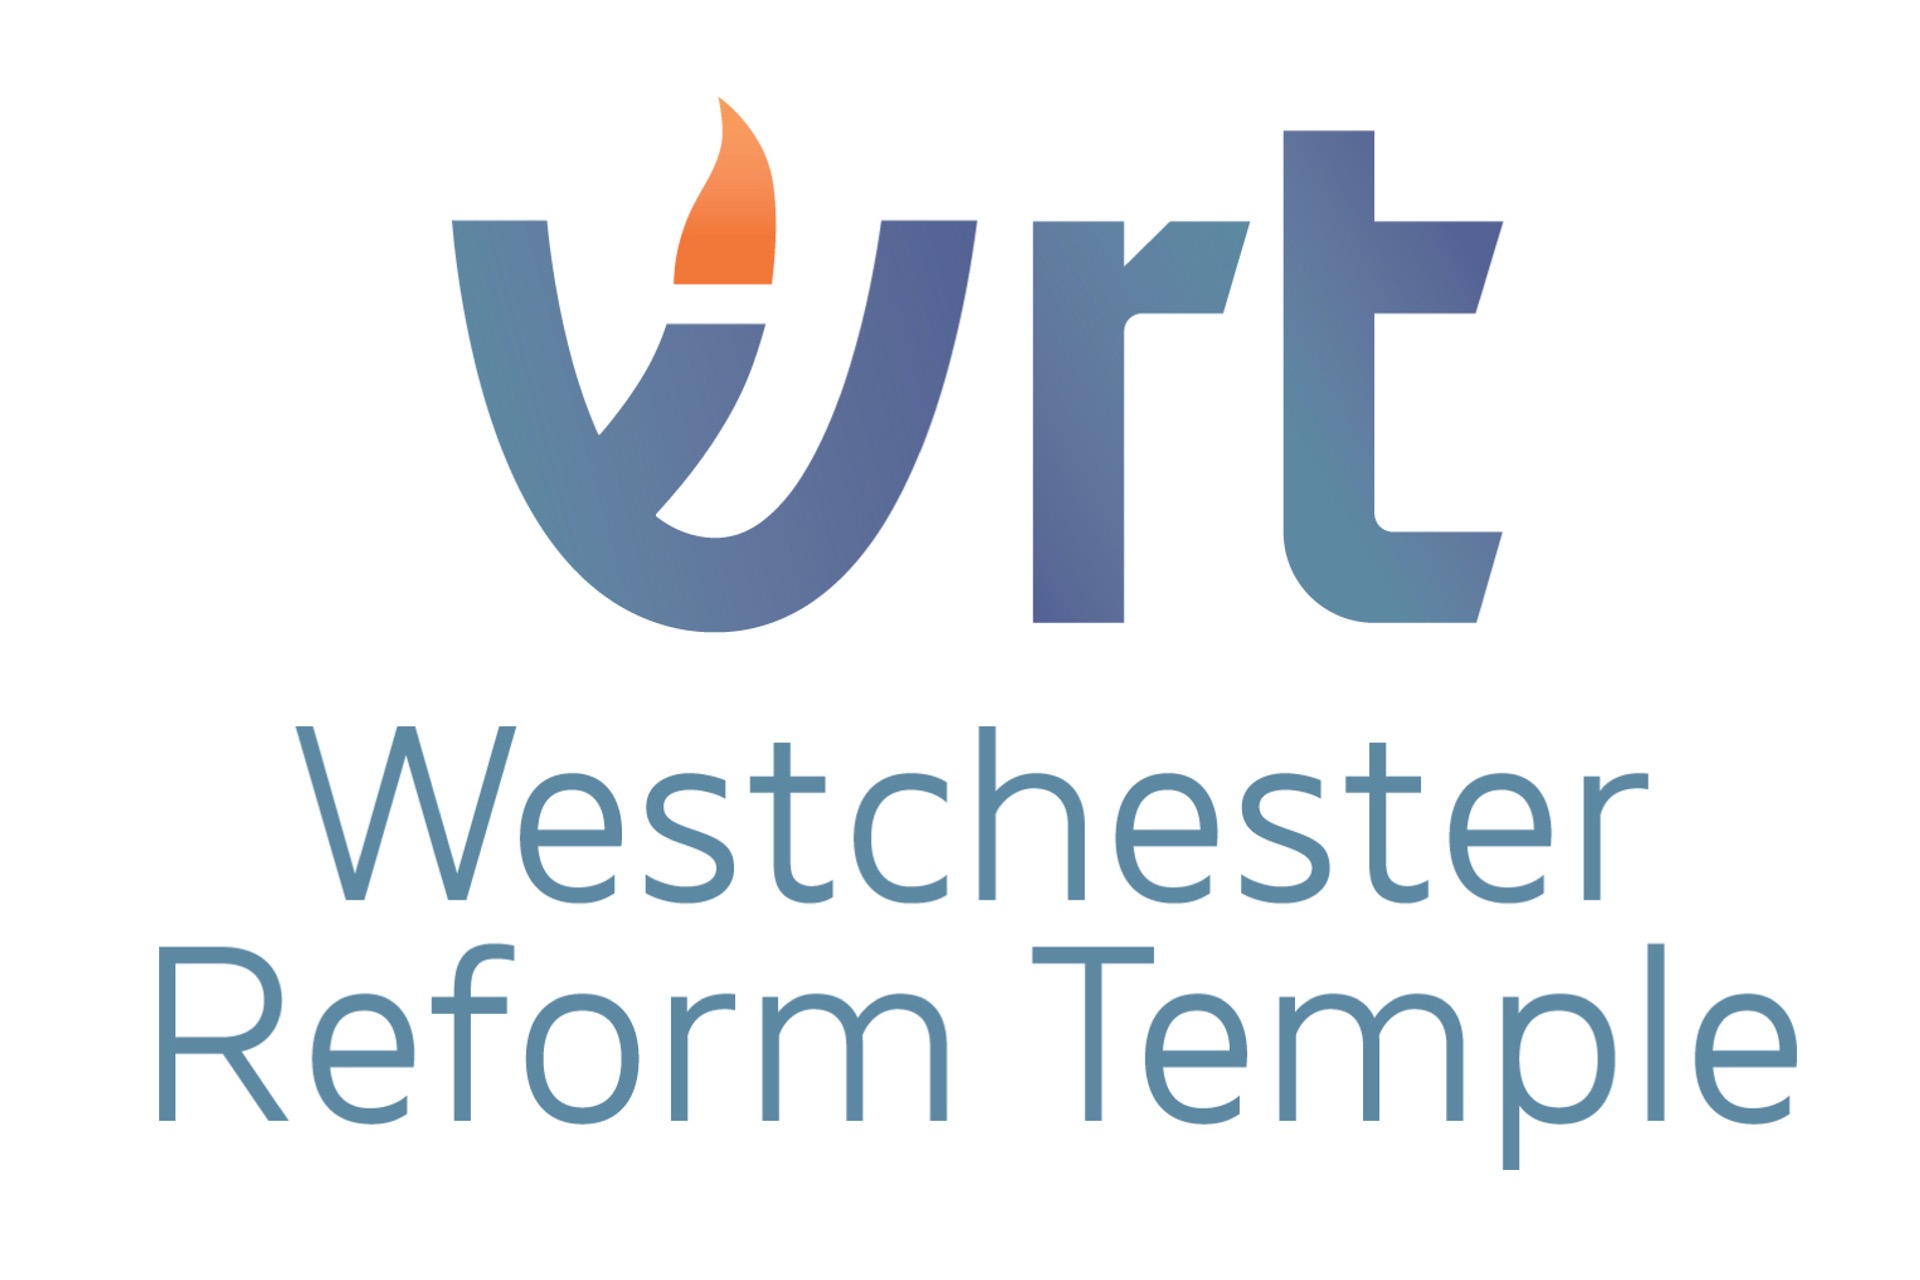 Westchester Reform Temple